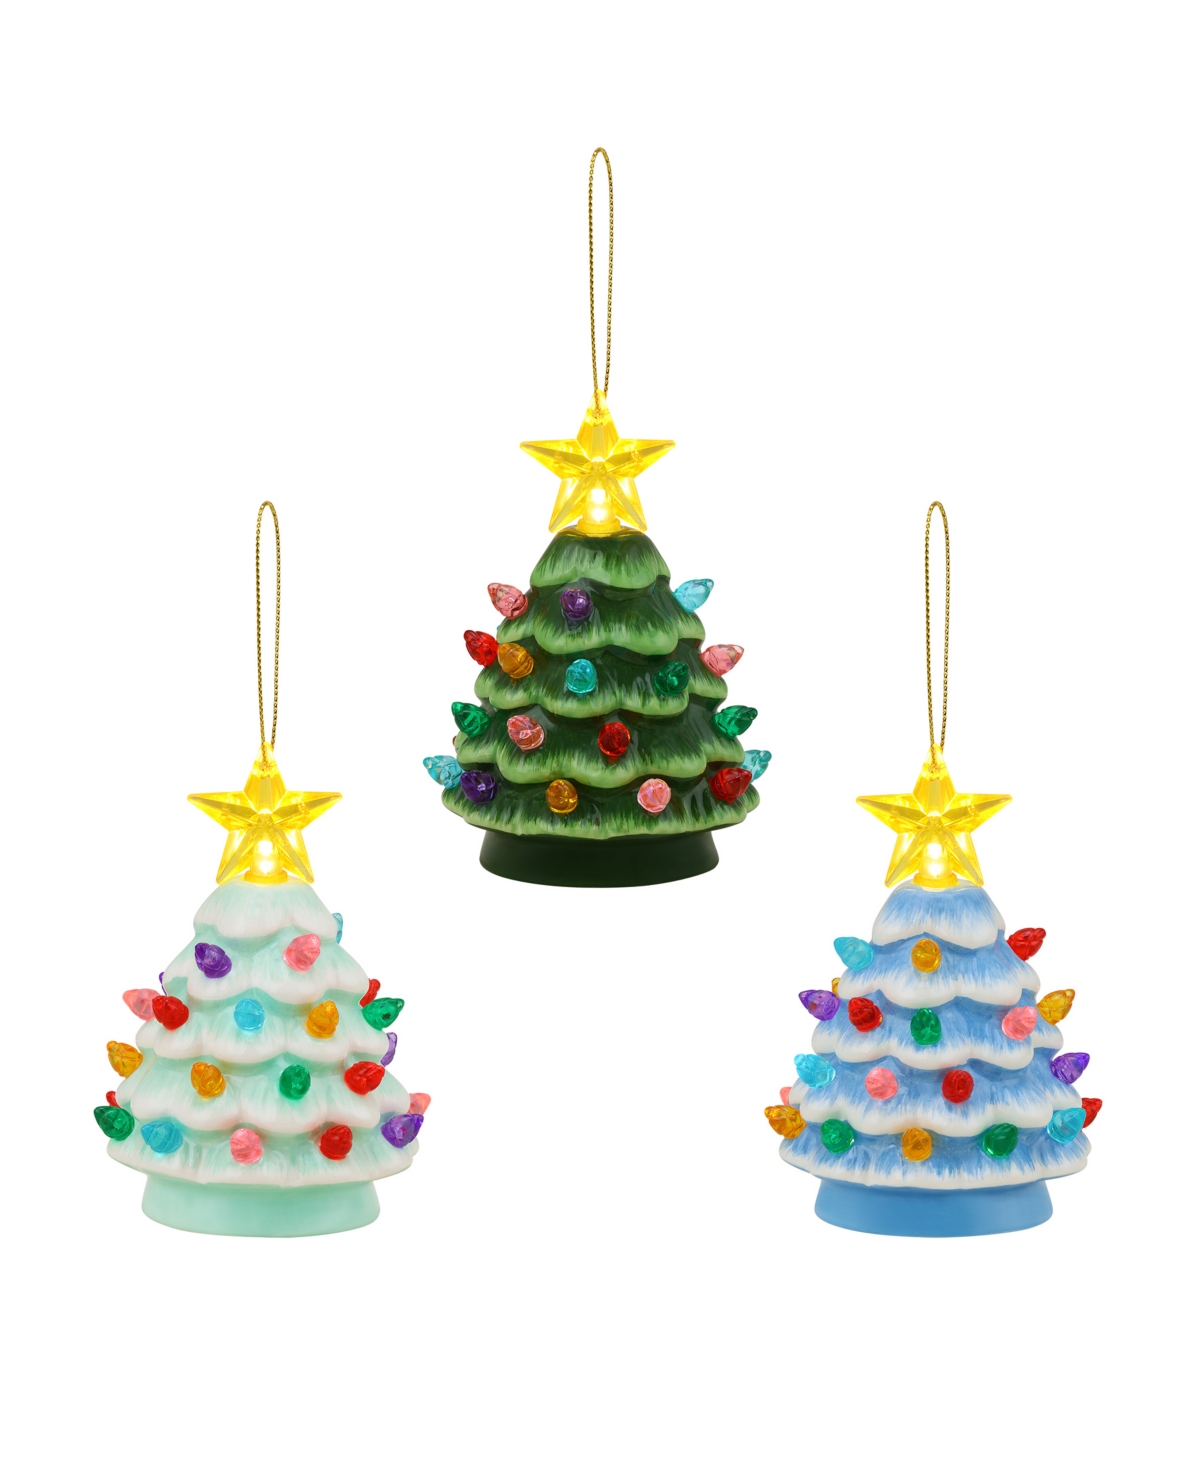 Mr. Christmas 4" Nostalgic Ceramic Lit Tree Ornaments Green, Light Blue, Sea Foam, Set Of 3 In Multi